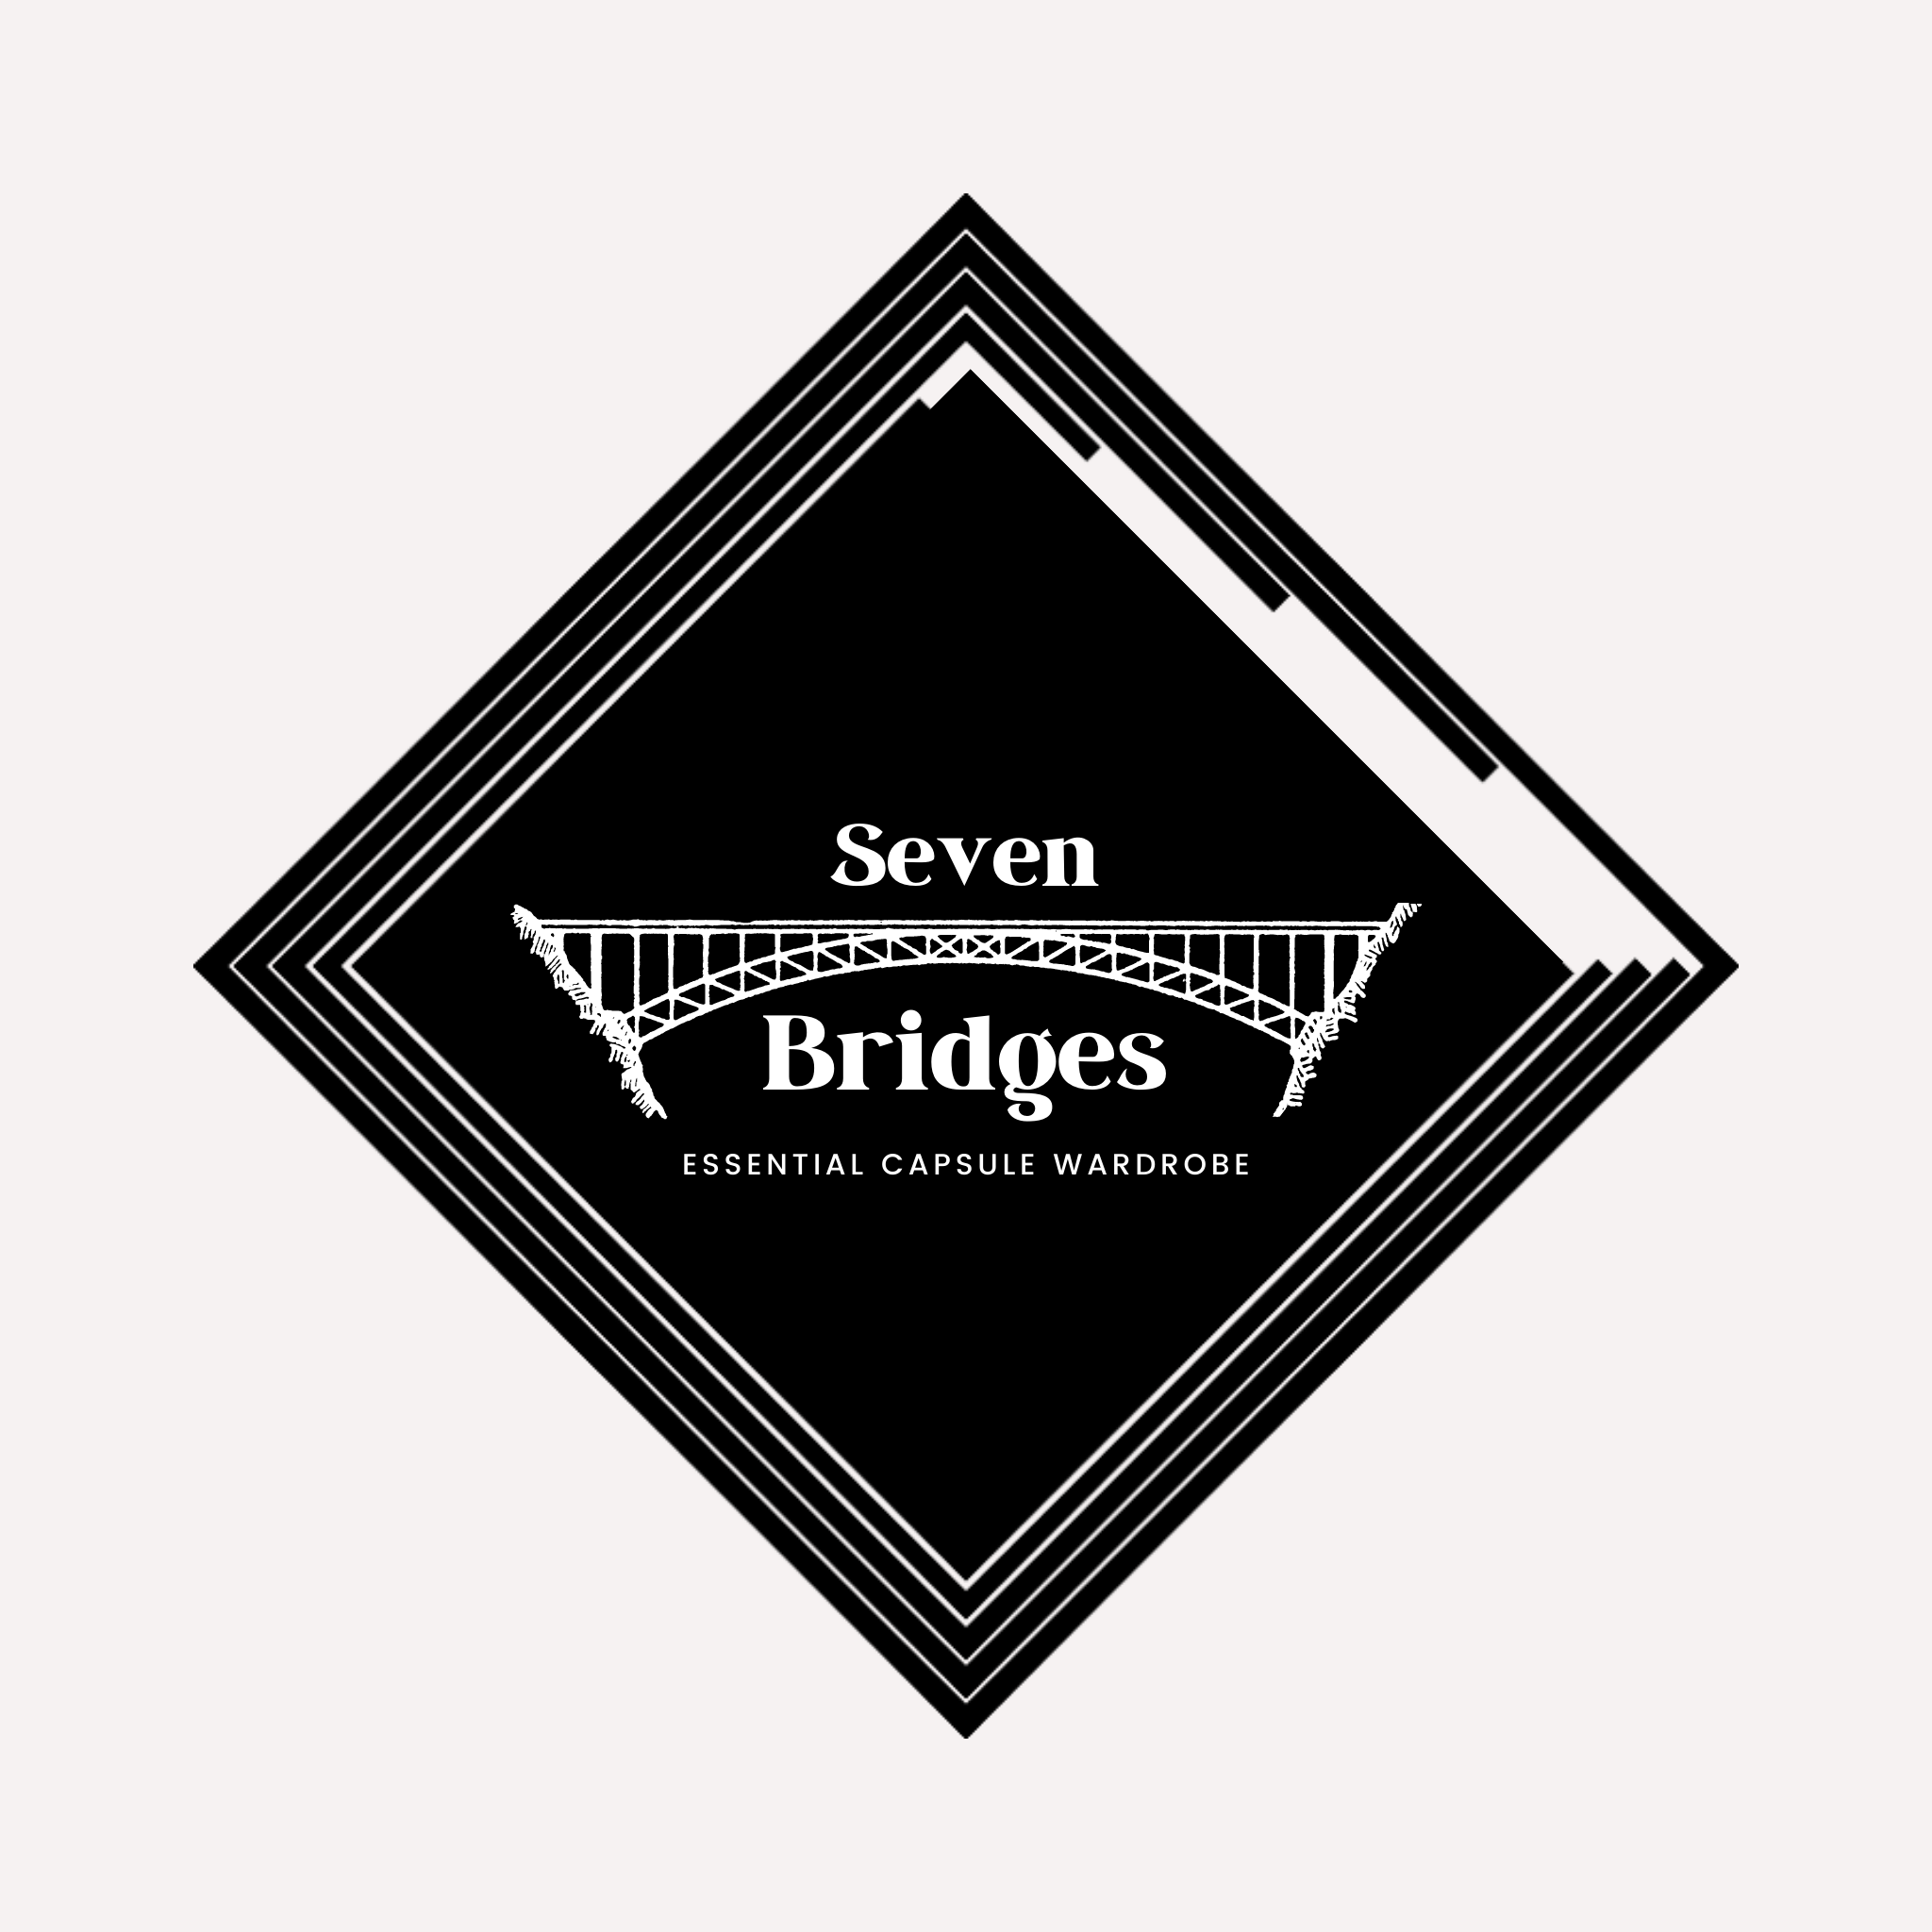 Seven Bridges Collection: A Complete Capsule Wardrobe